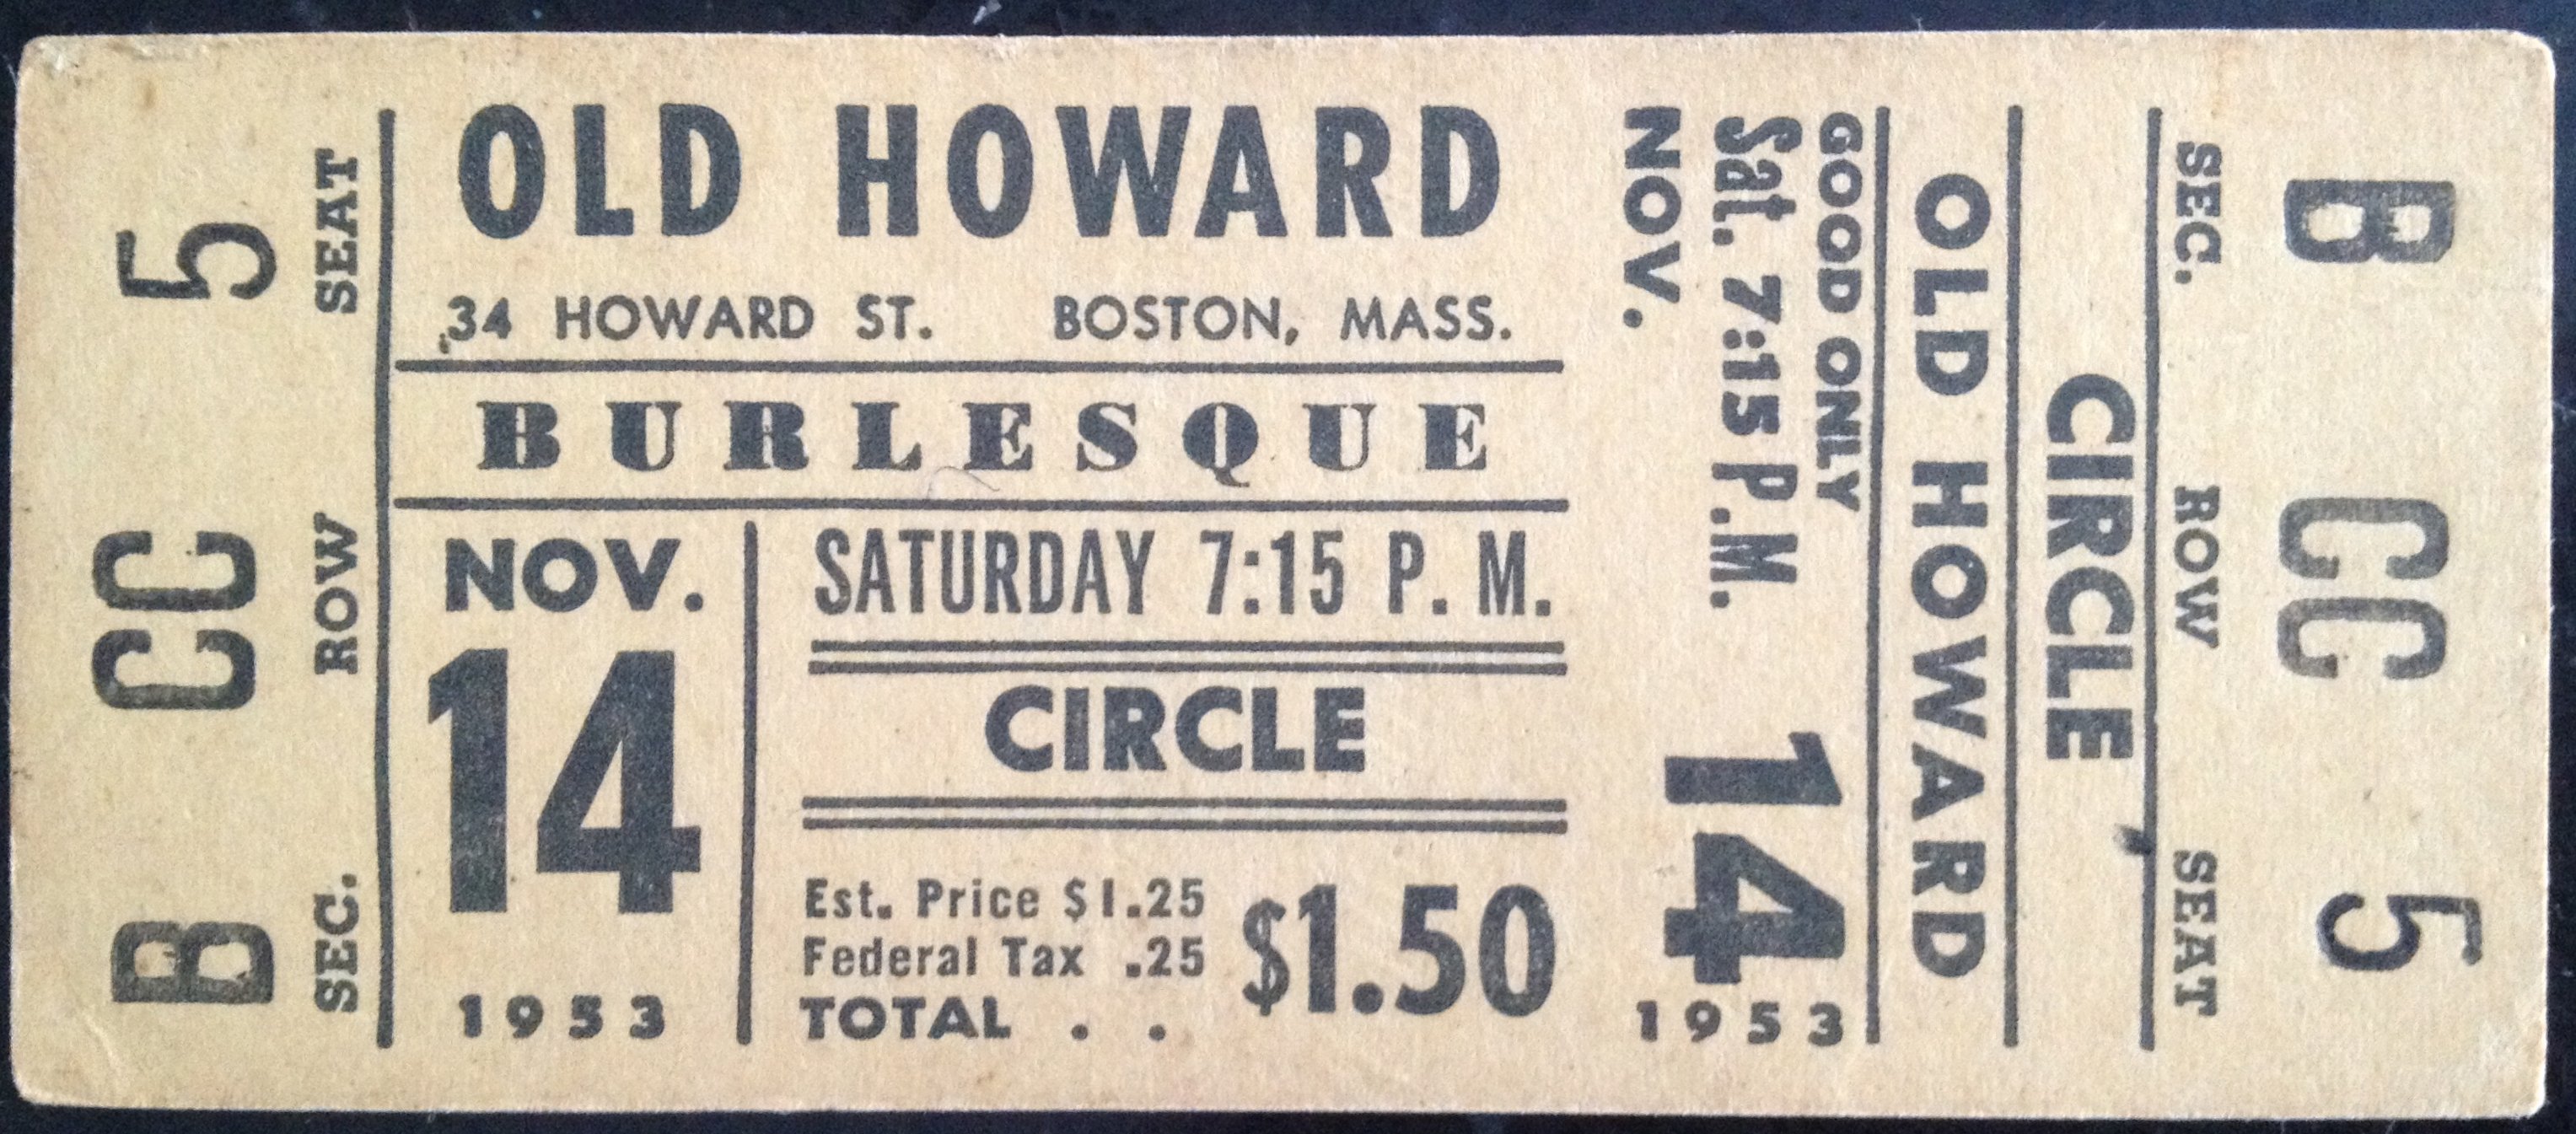 Old Howard ticket